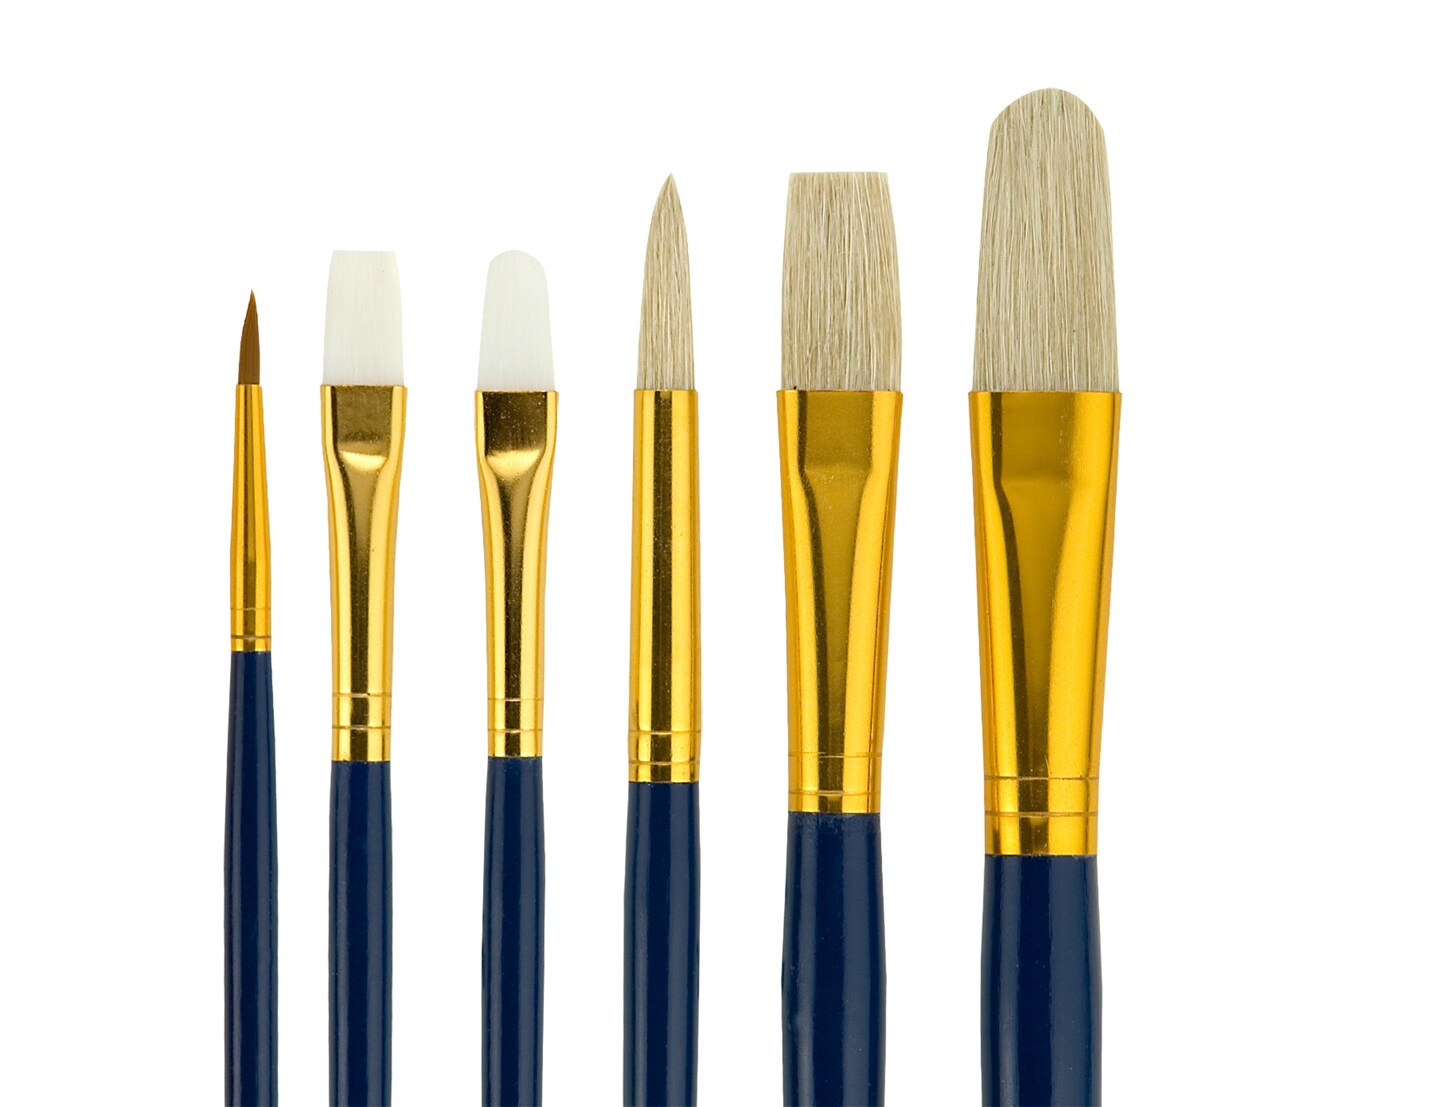 Creative Mark Fundamentals Paint Brush No. 18 Set of 6 - Long Handled For Decorative Arts, Watercolor, Acrylic, Oils, &#x26; More! - 12 Pack (72 Pcs)